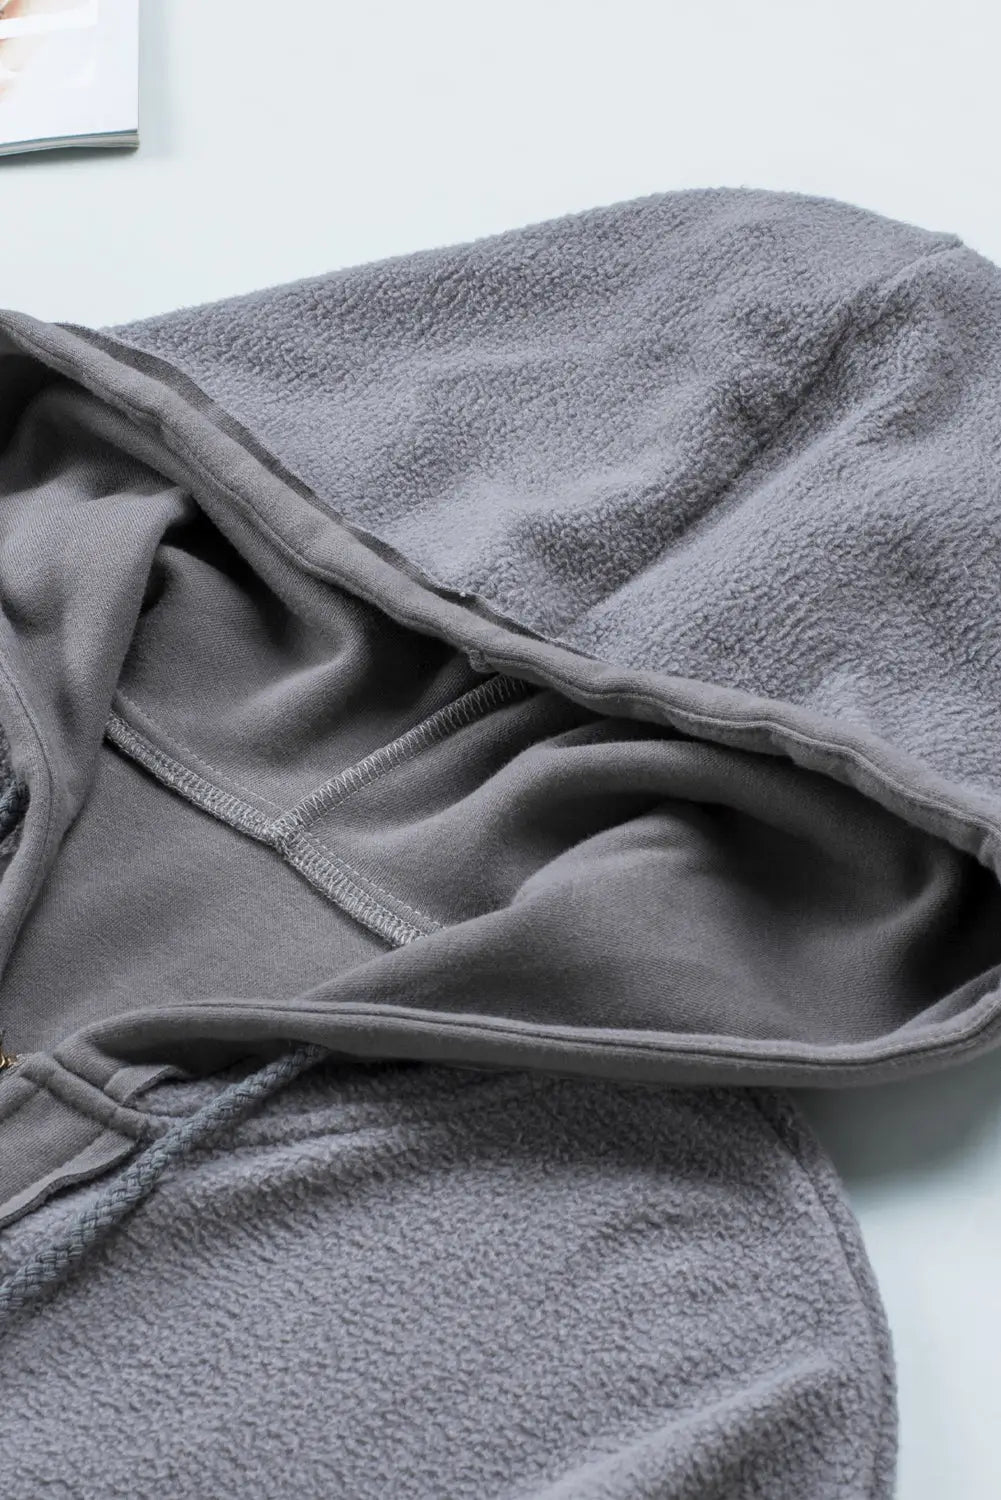 Apricot flap pocket drawstring hood zip up jacket - outerwear